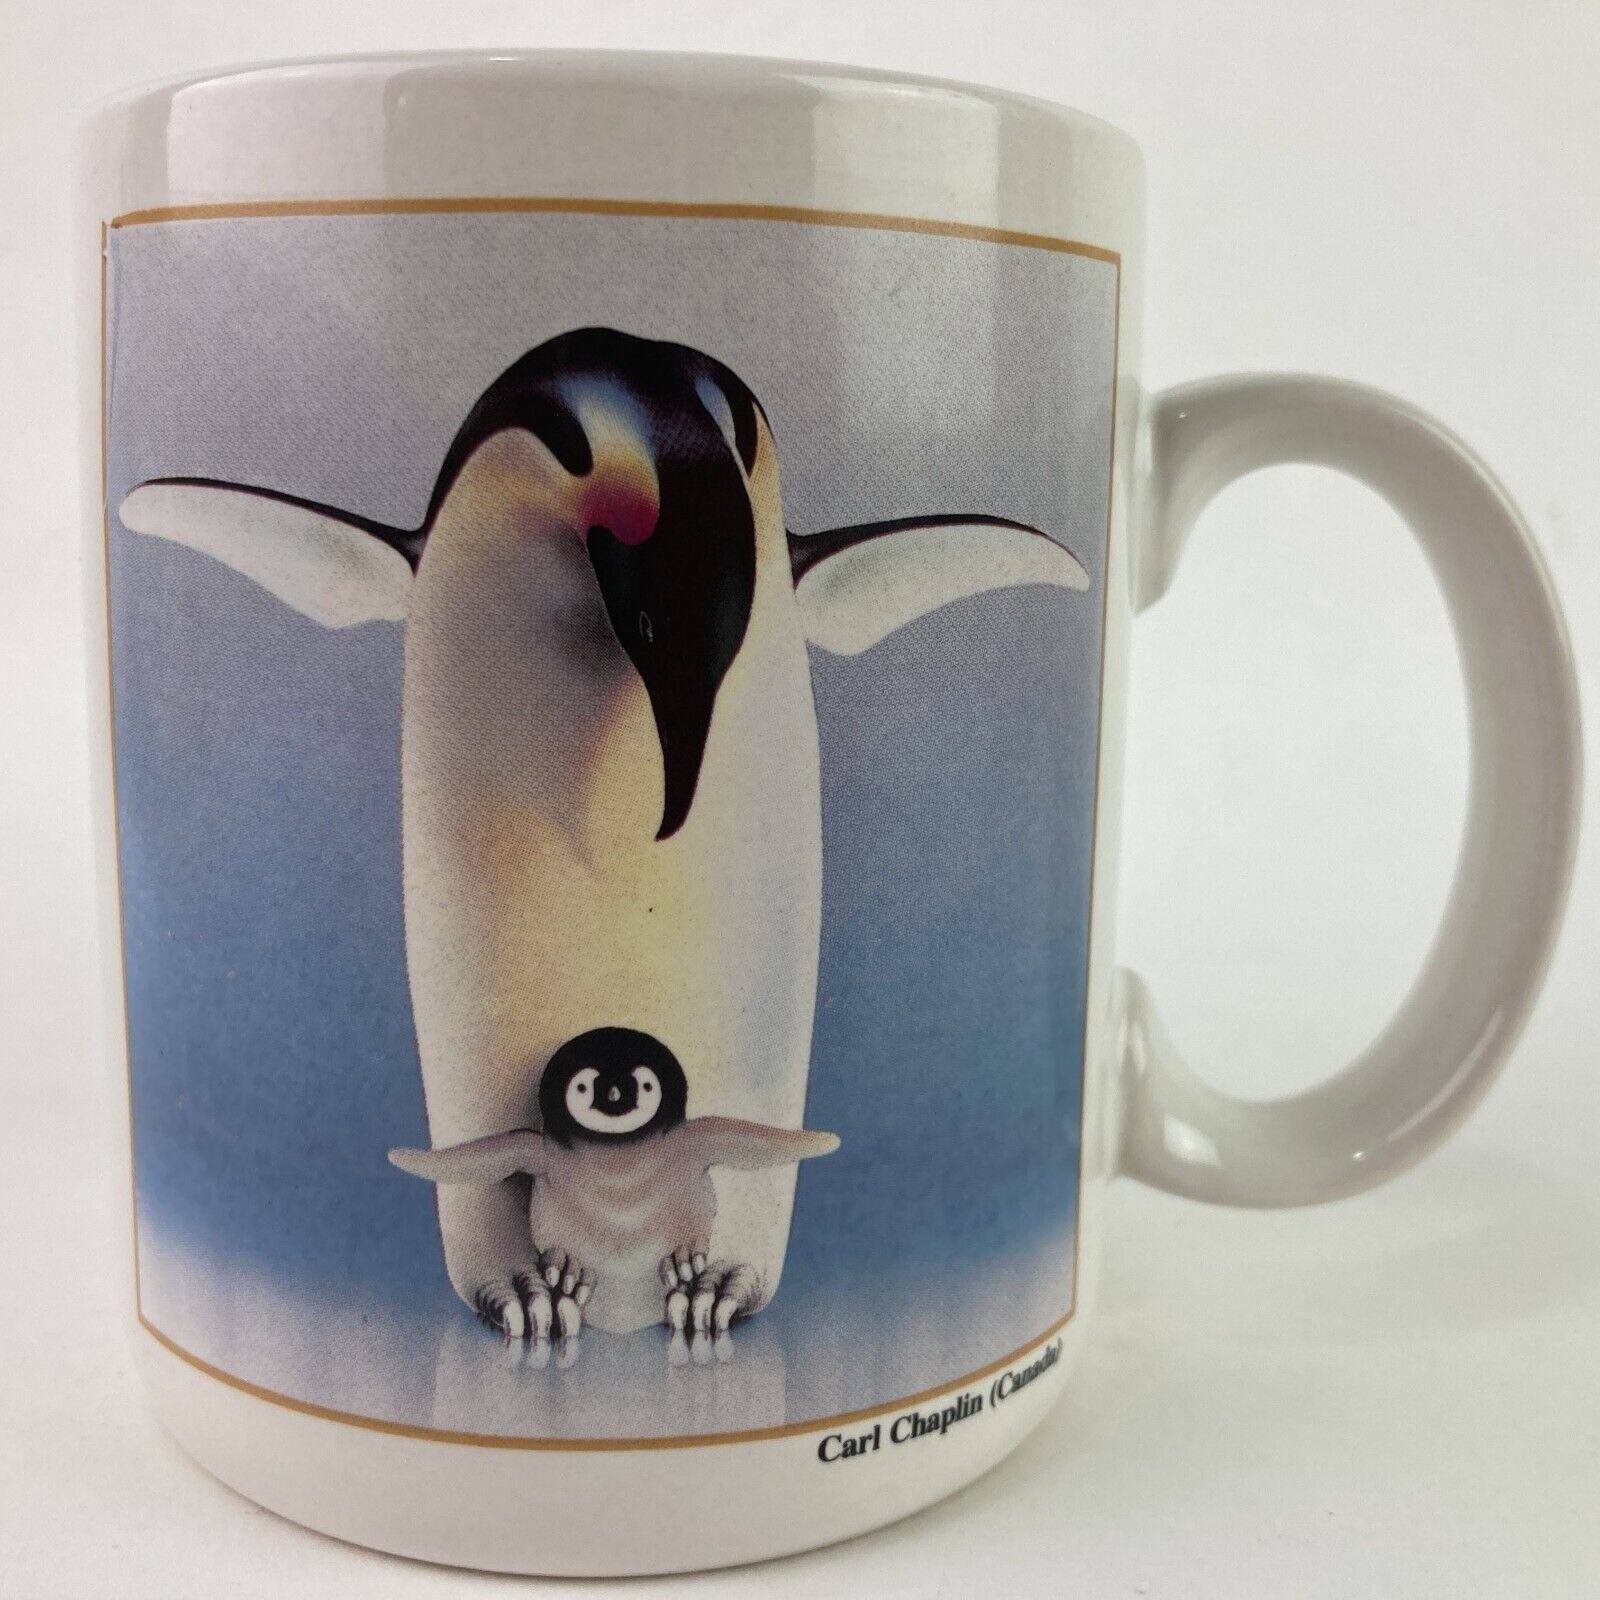 Emperor Penguins Carl Chaplin Canada Mug Cup United Nations Children Hope World